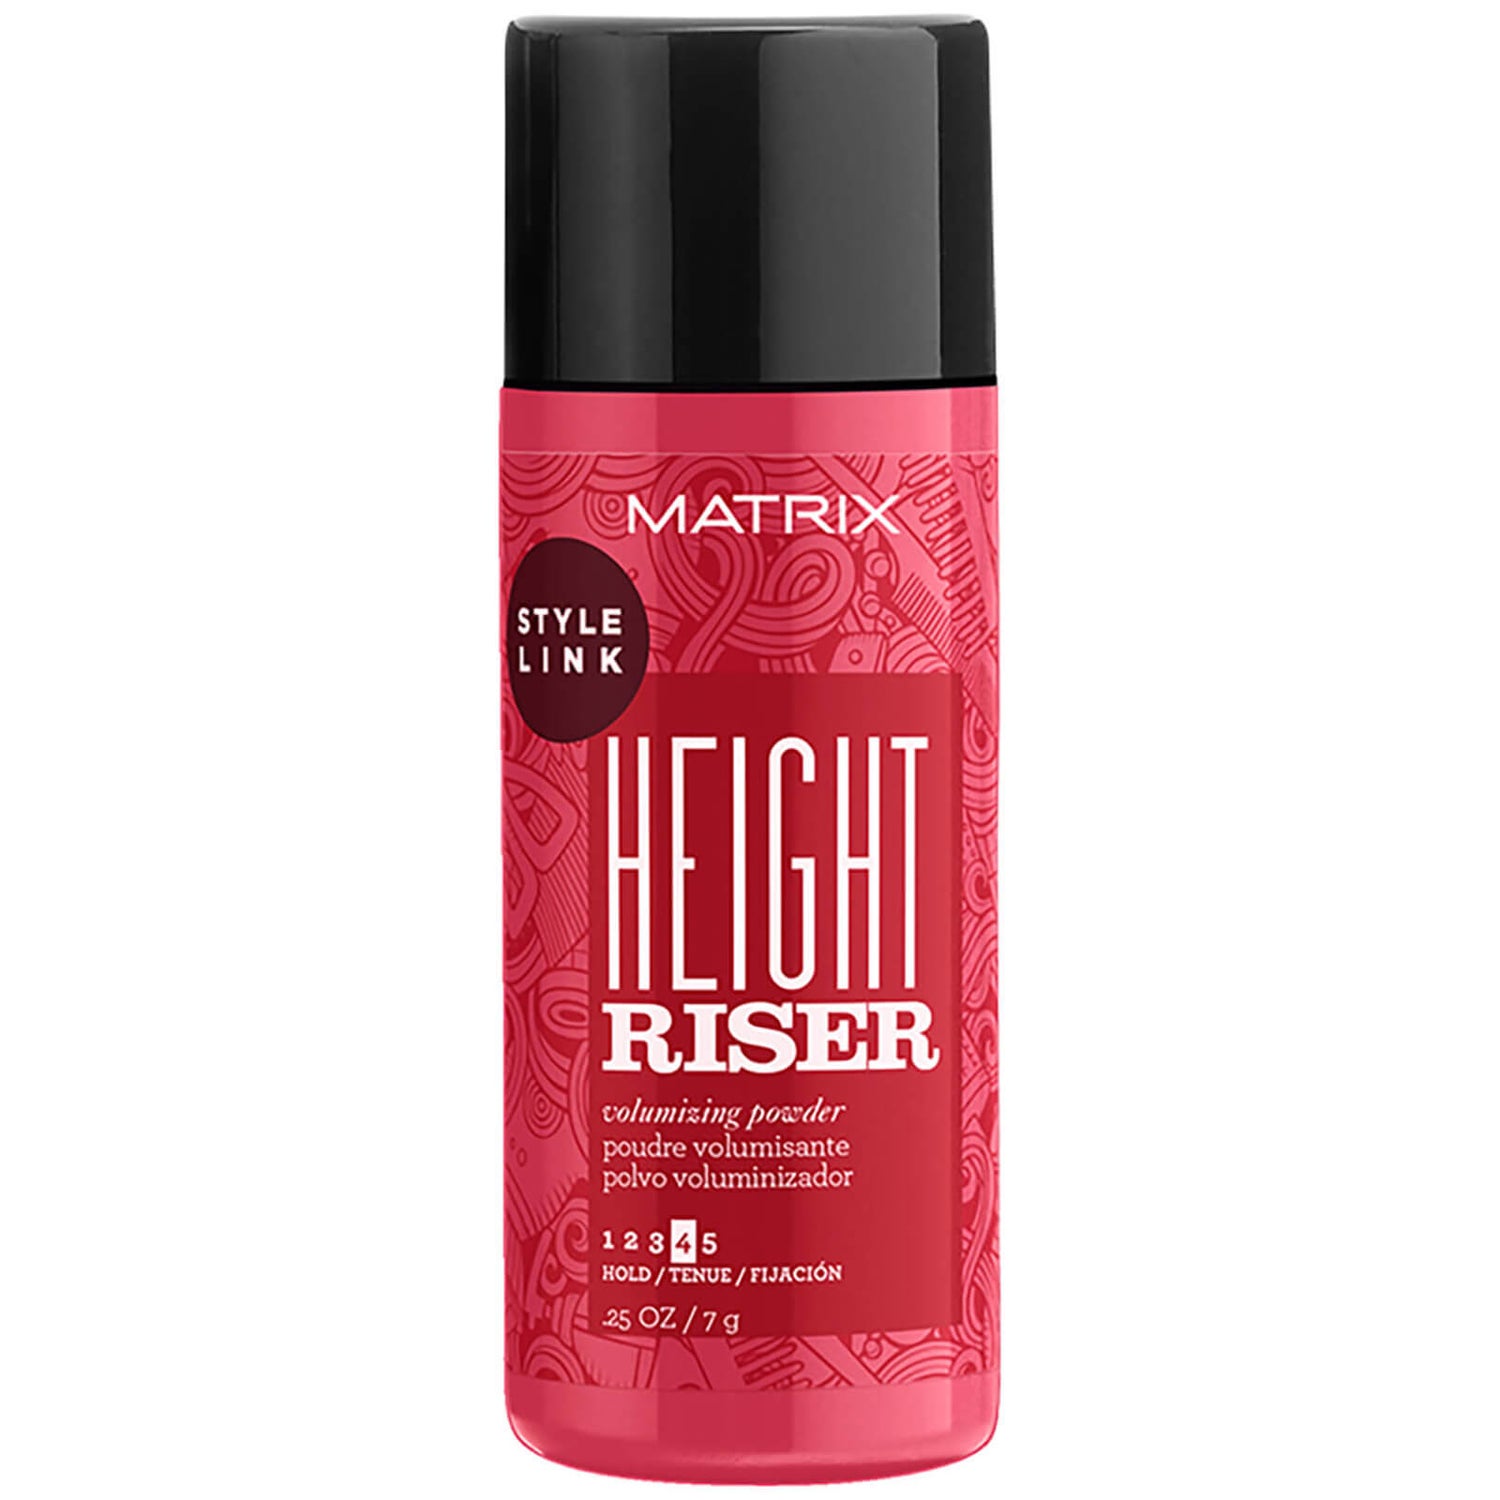 Matrixn Style Link Height Riser Volumizing Powder